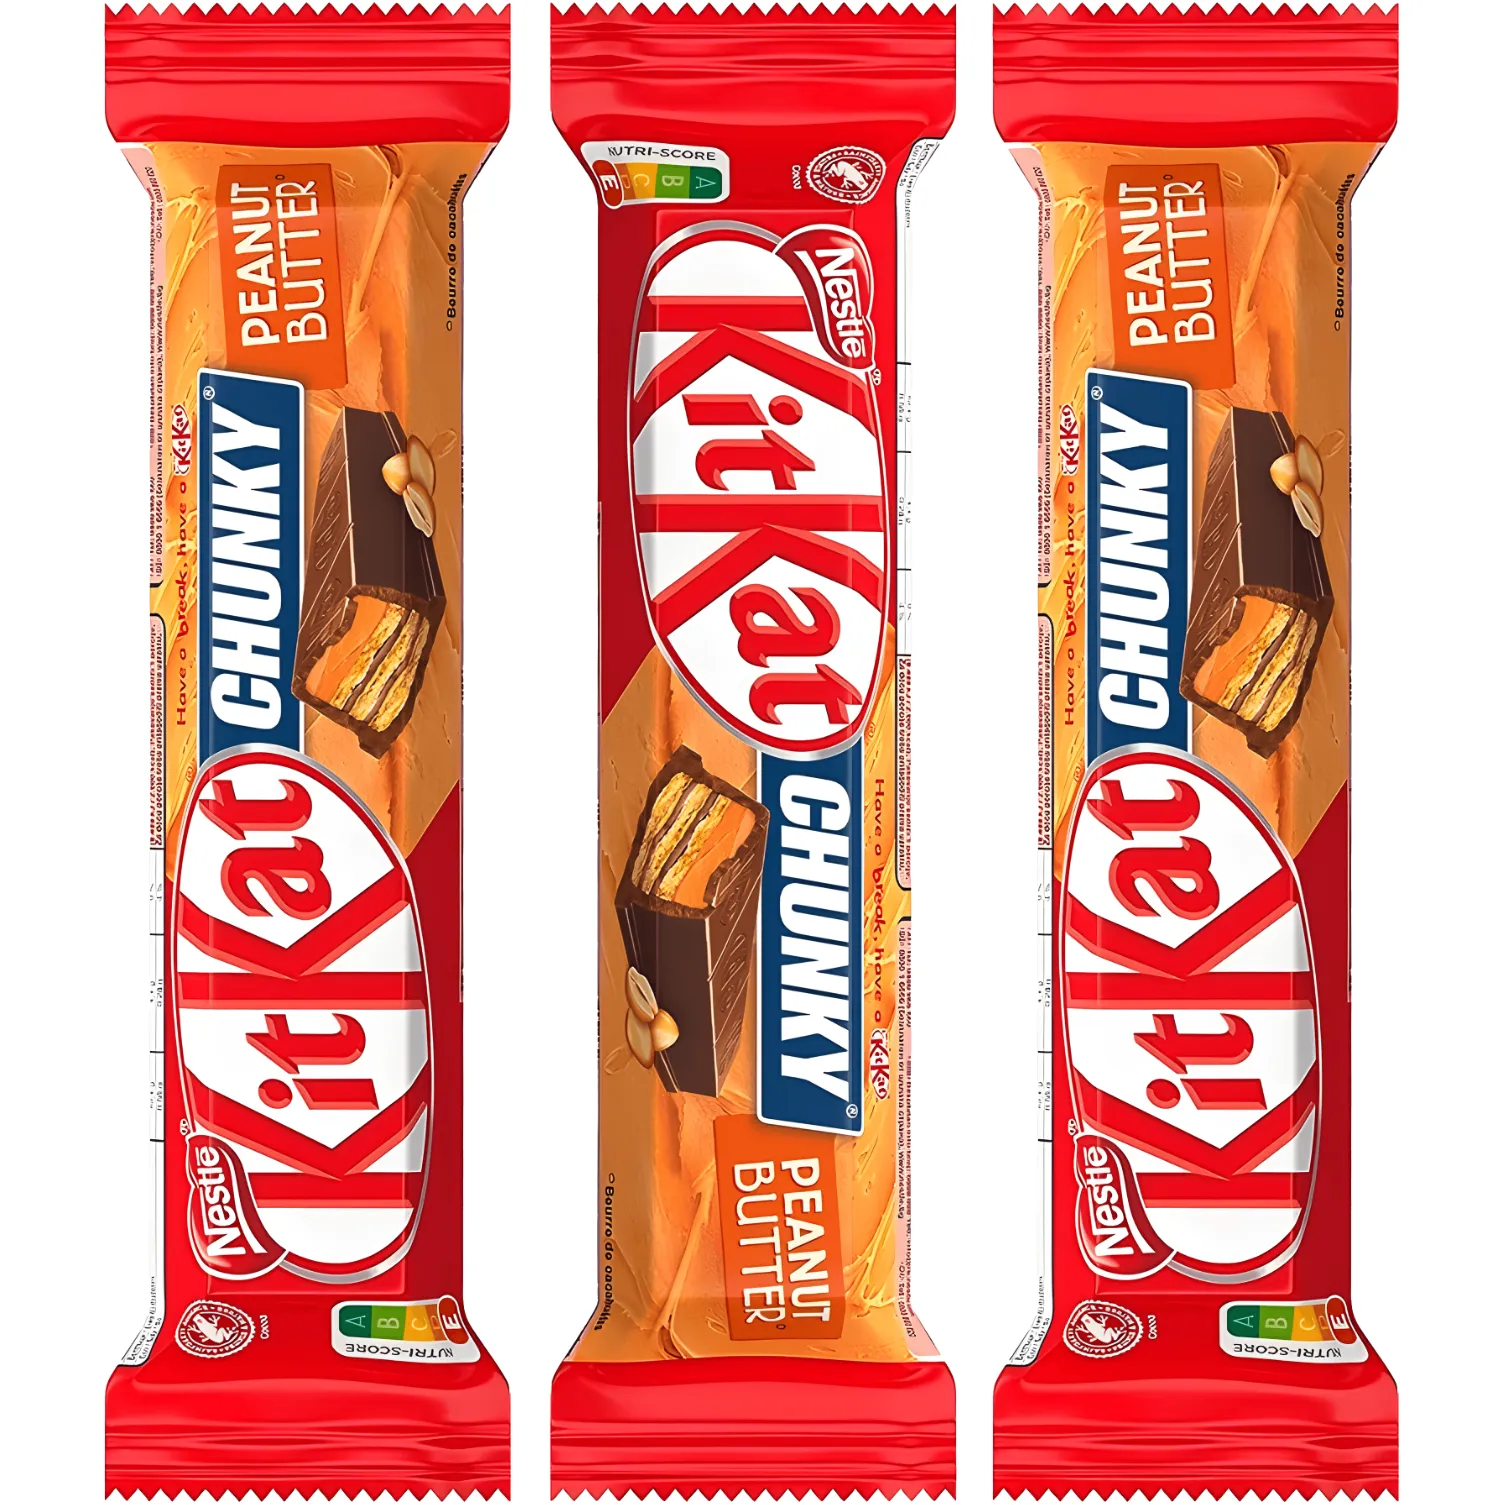 Free KitKat Chunky Peanut Butter Bar